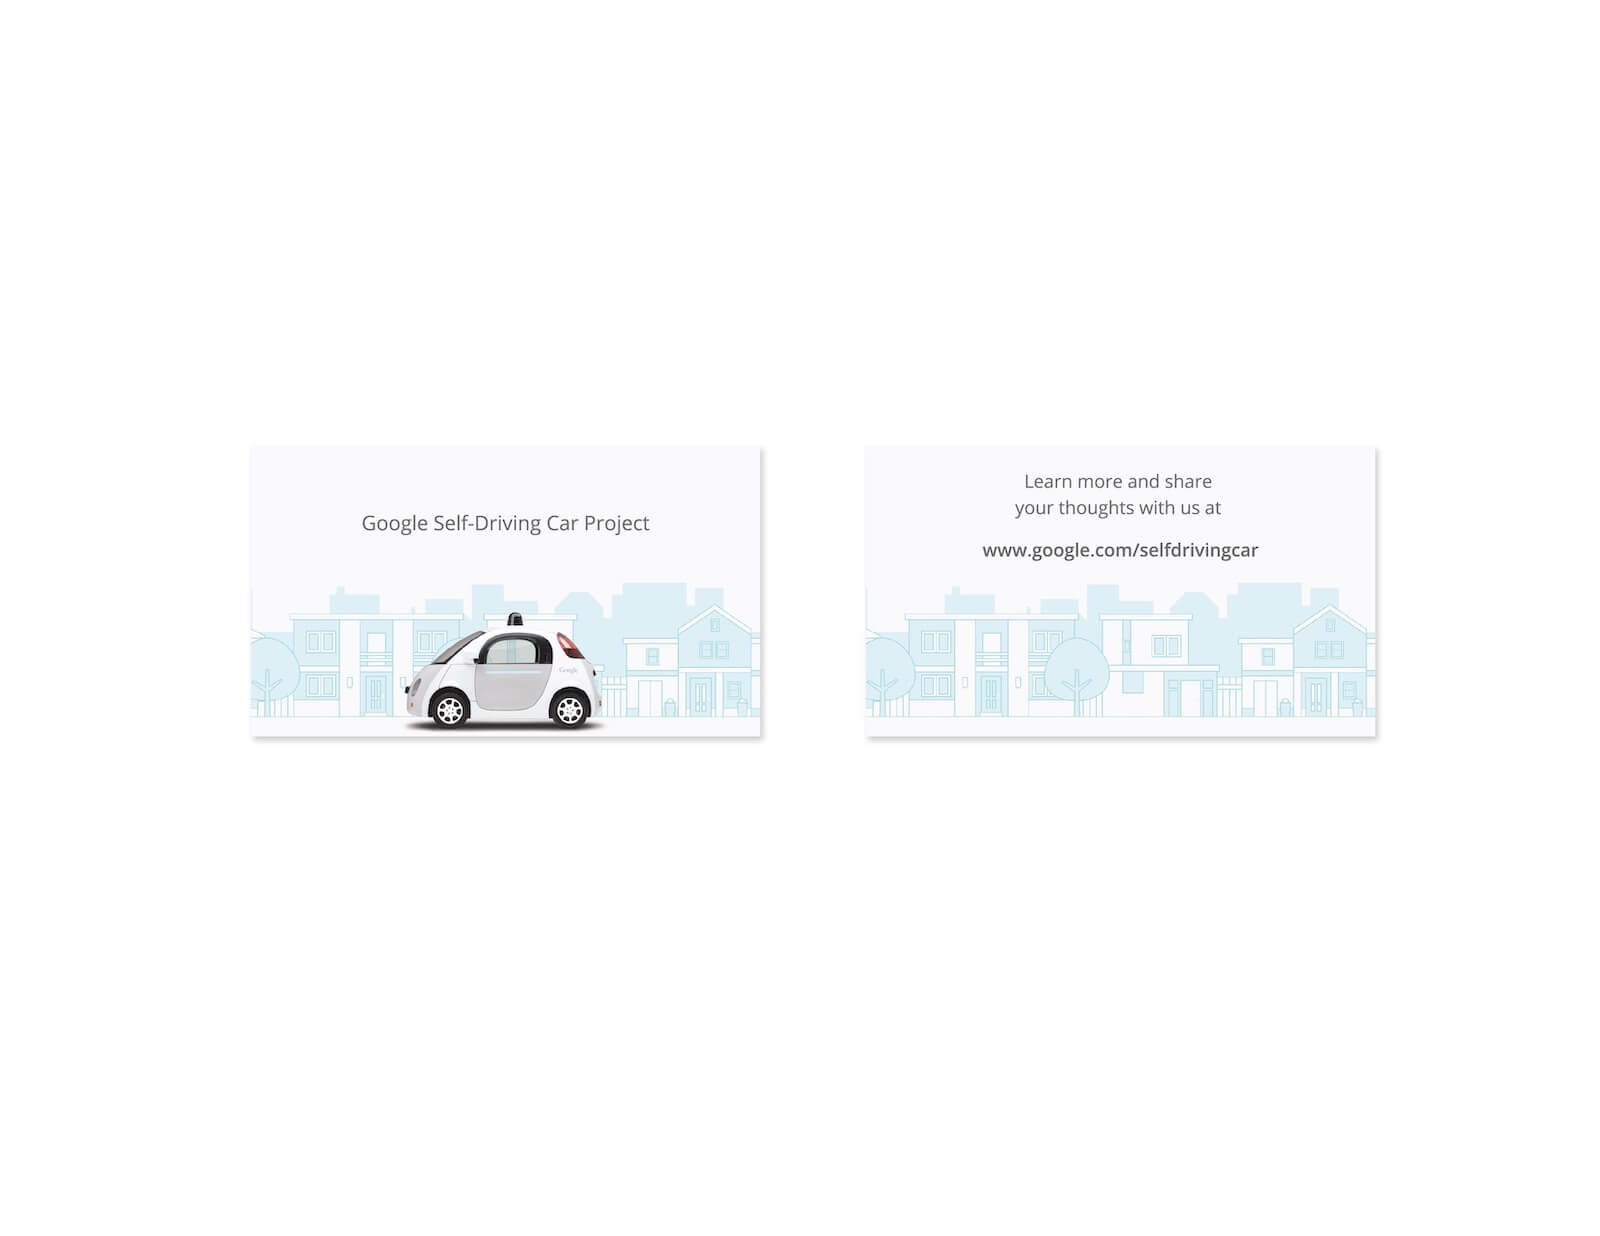 Google Self-Driving Car business card design